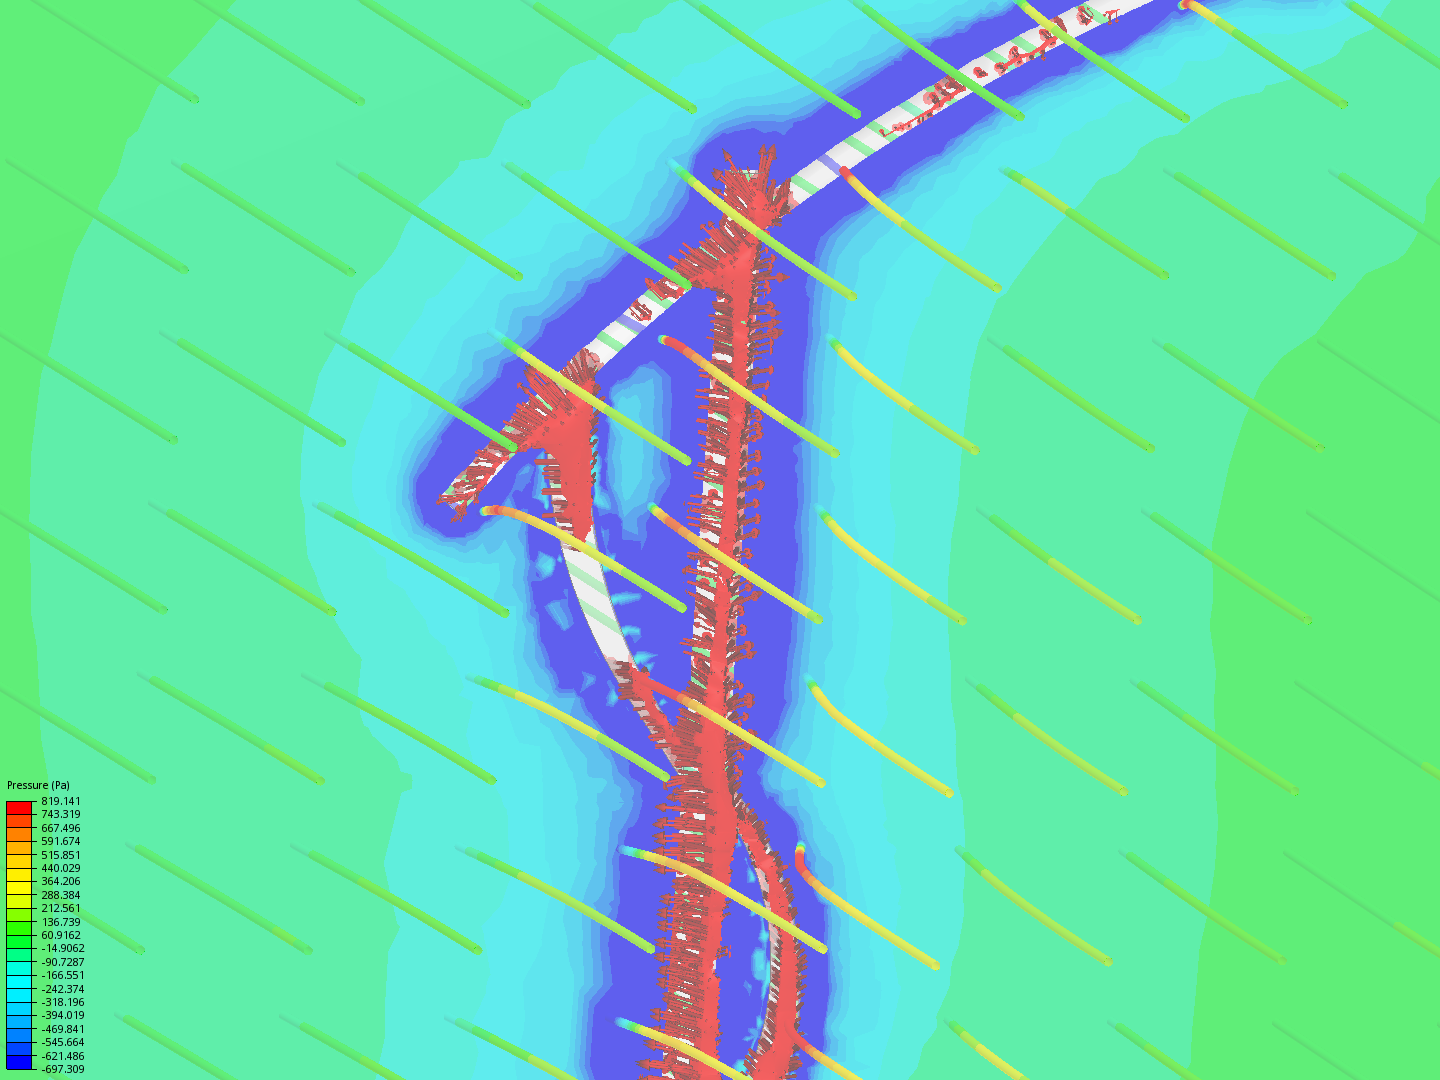 light pole design analysis image